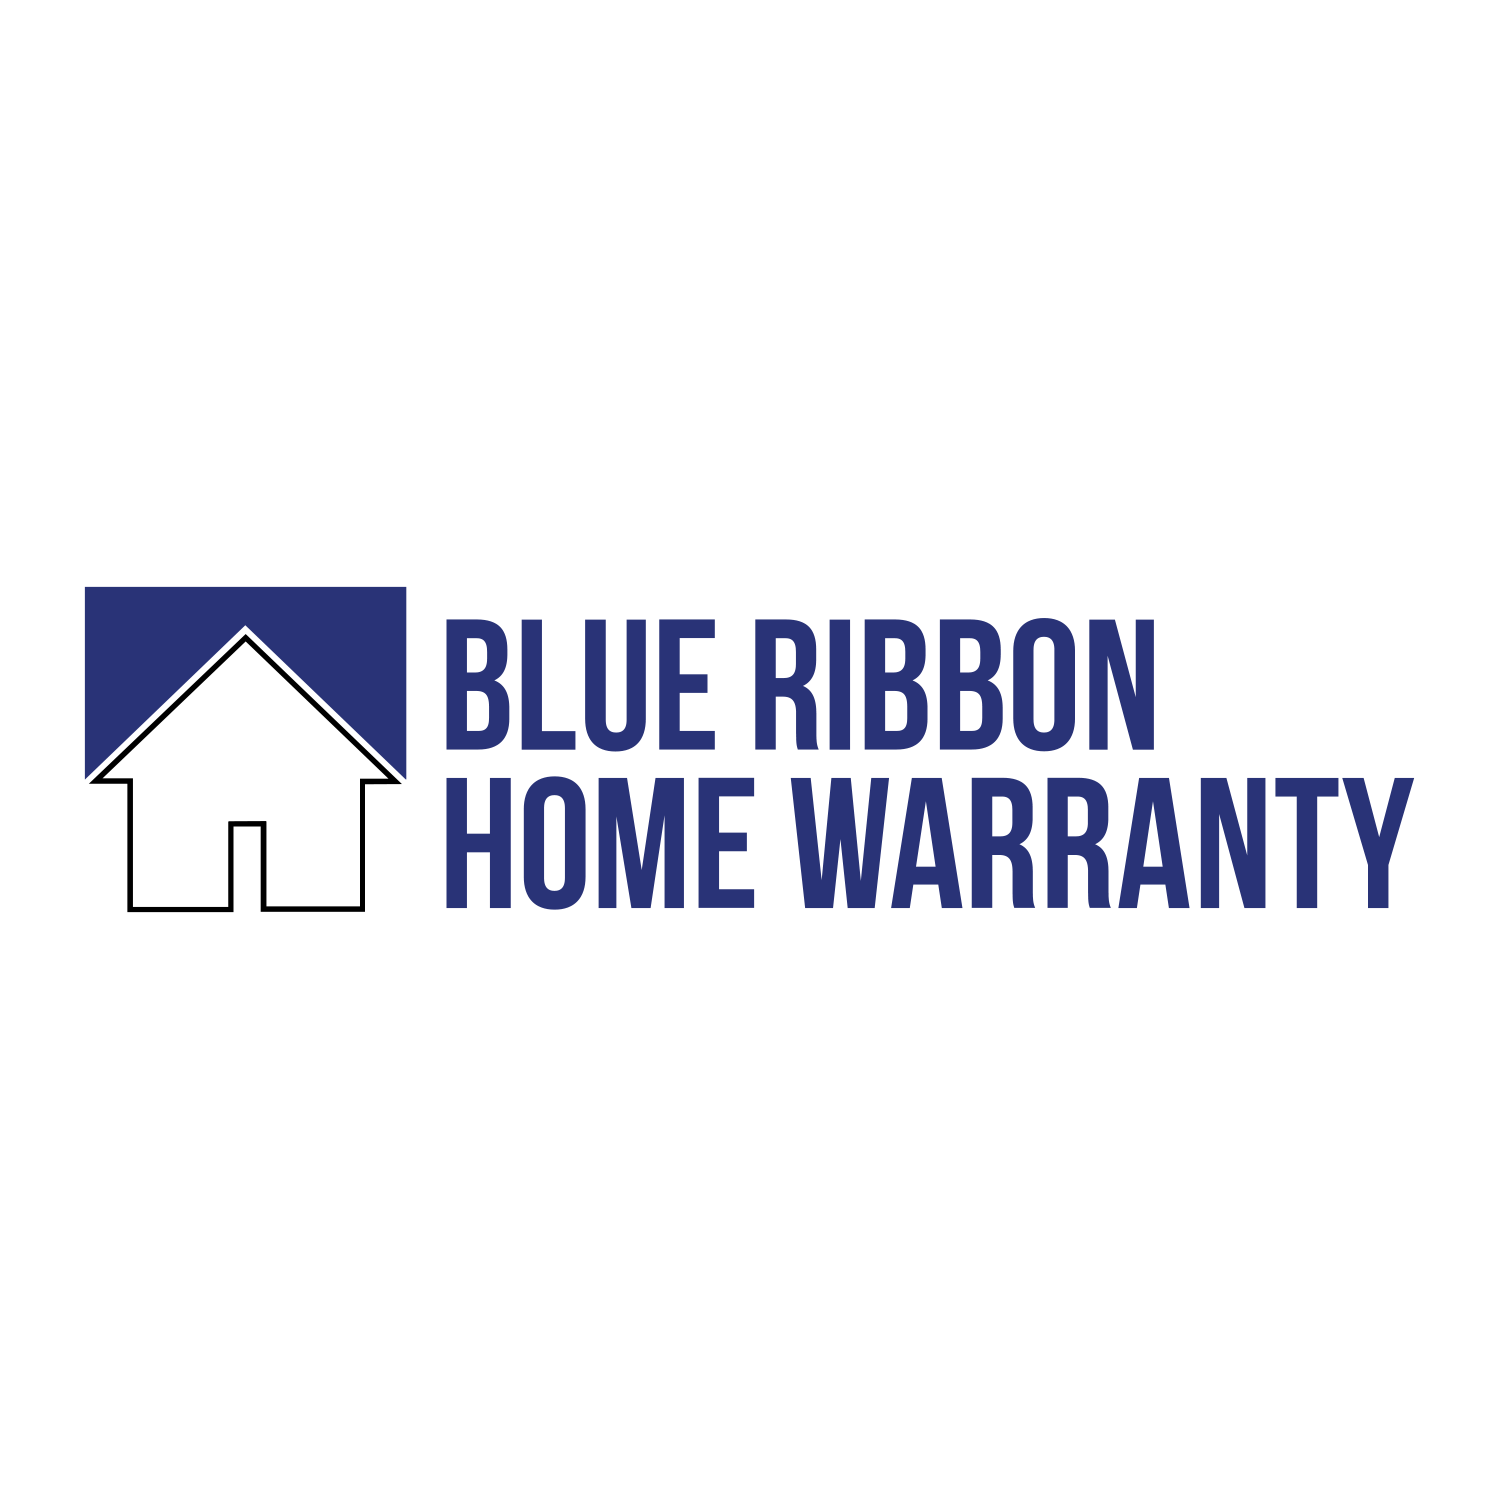 Contact Blue Ribbon Applications